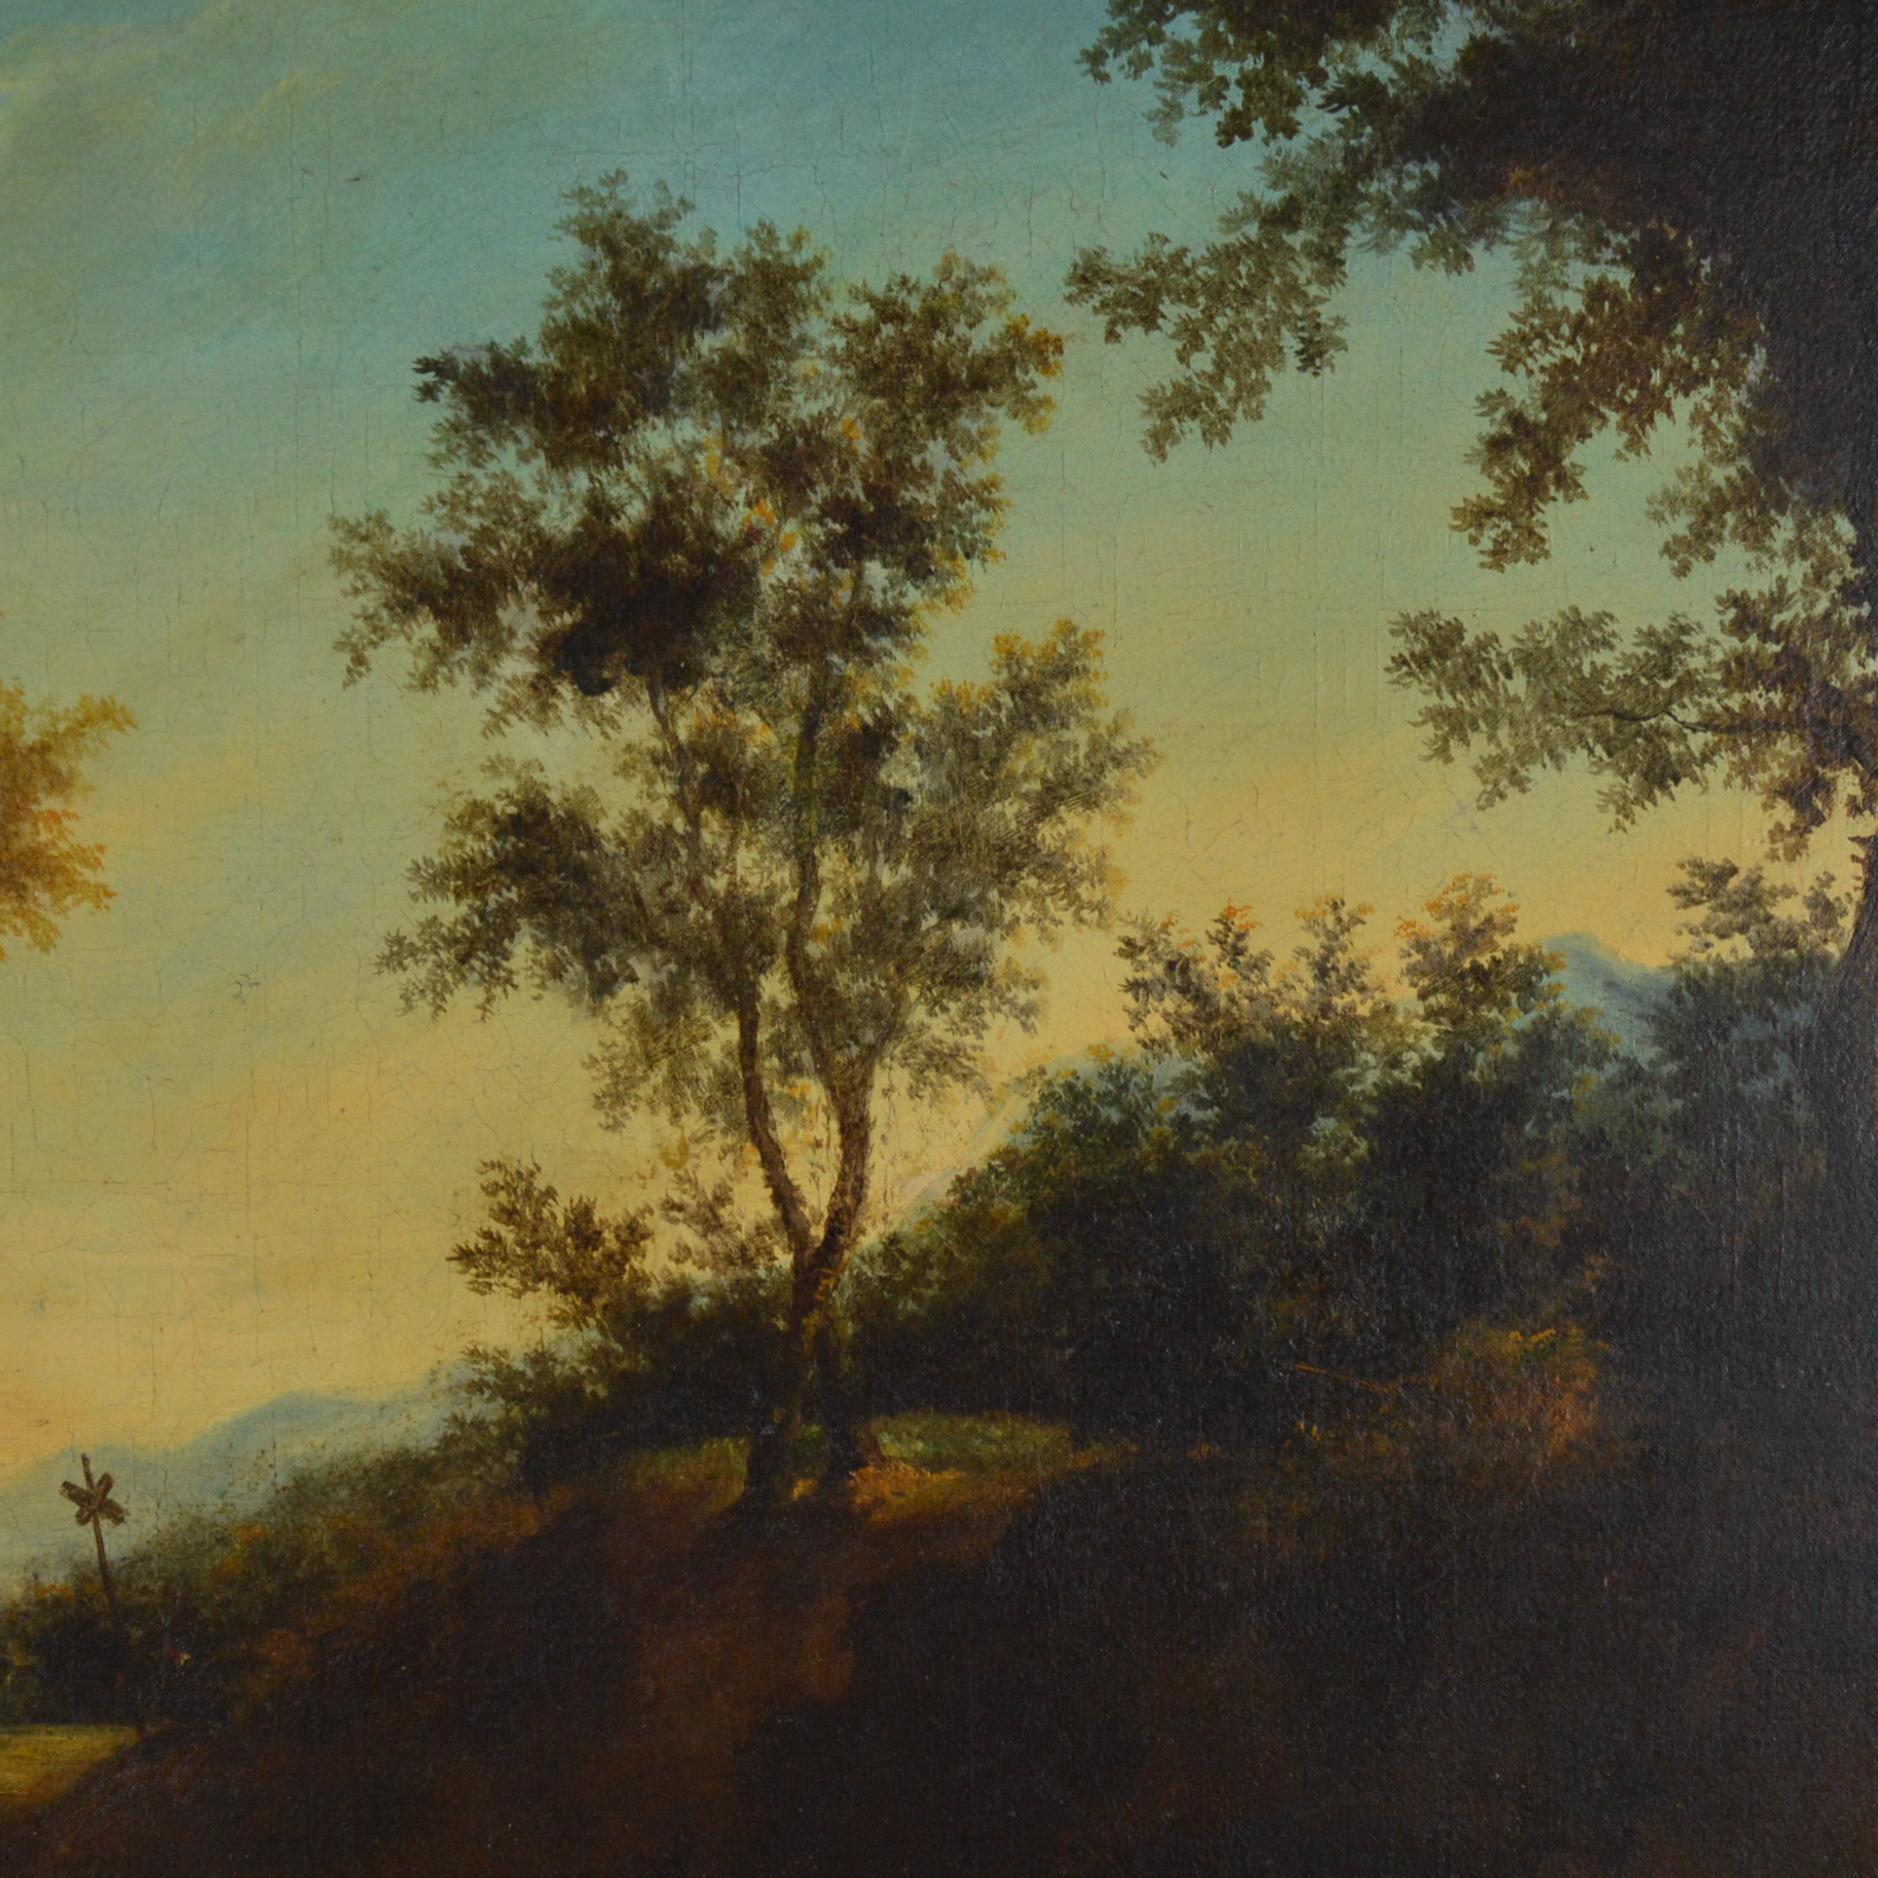 Landscape with figures painting Flemish school 18th century.
Oil on canvas. Measures: 52 x 49 cm, 74 x 71 cm (frame).